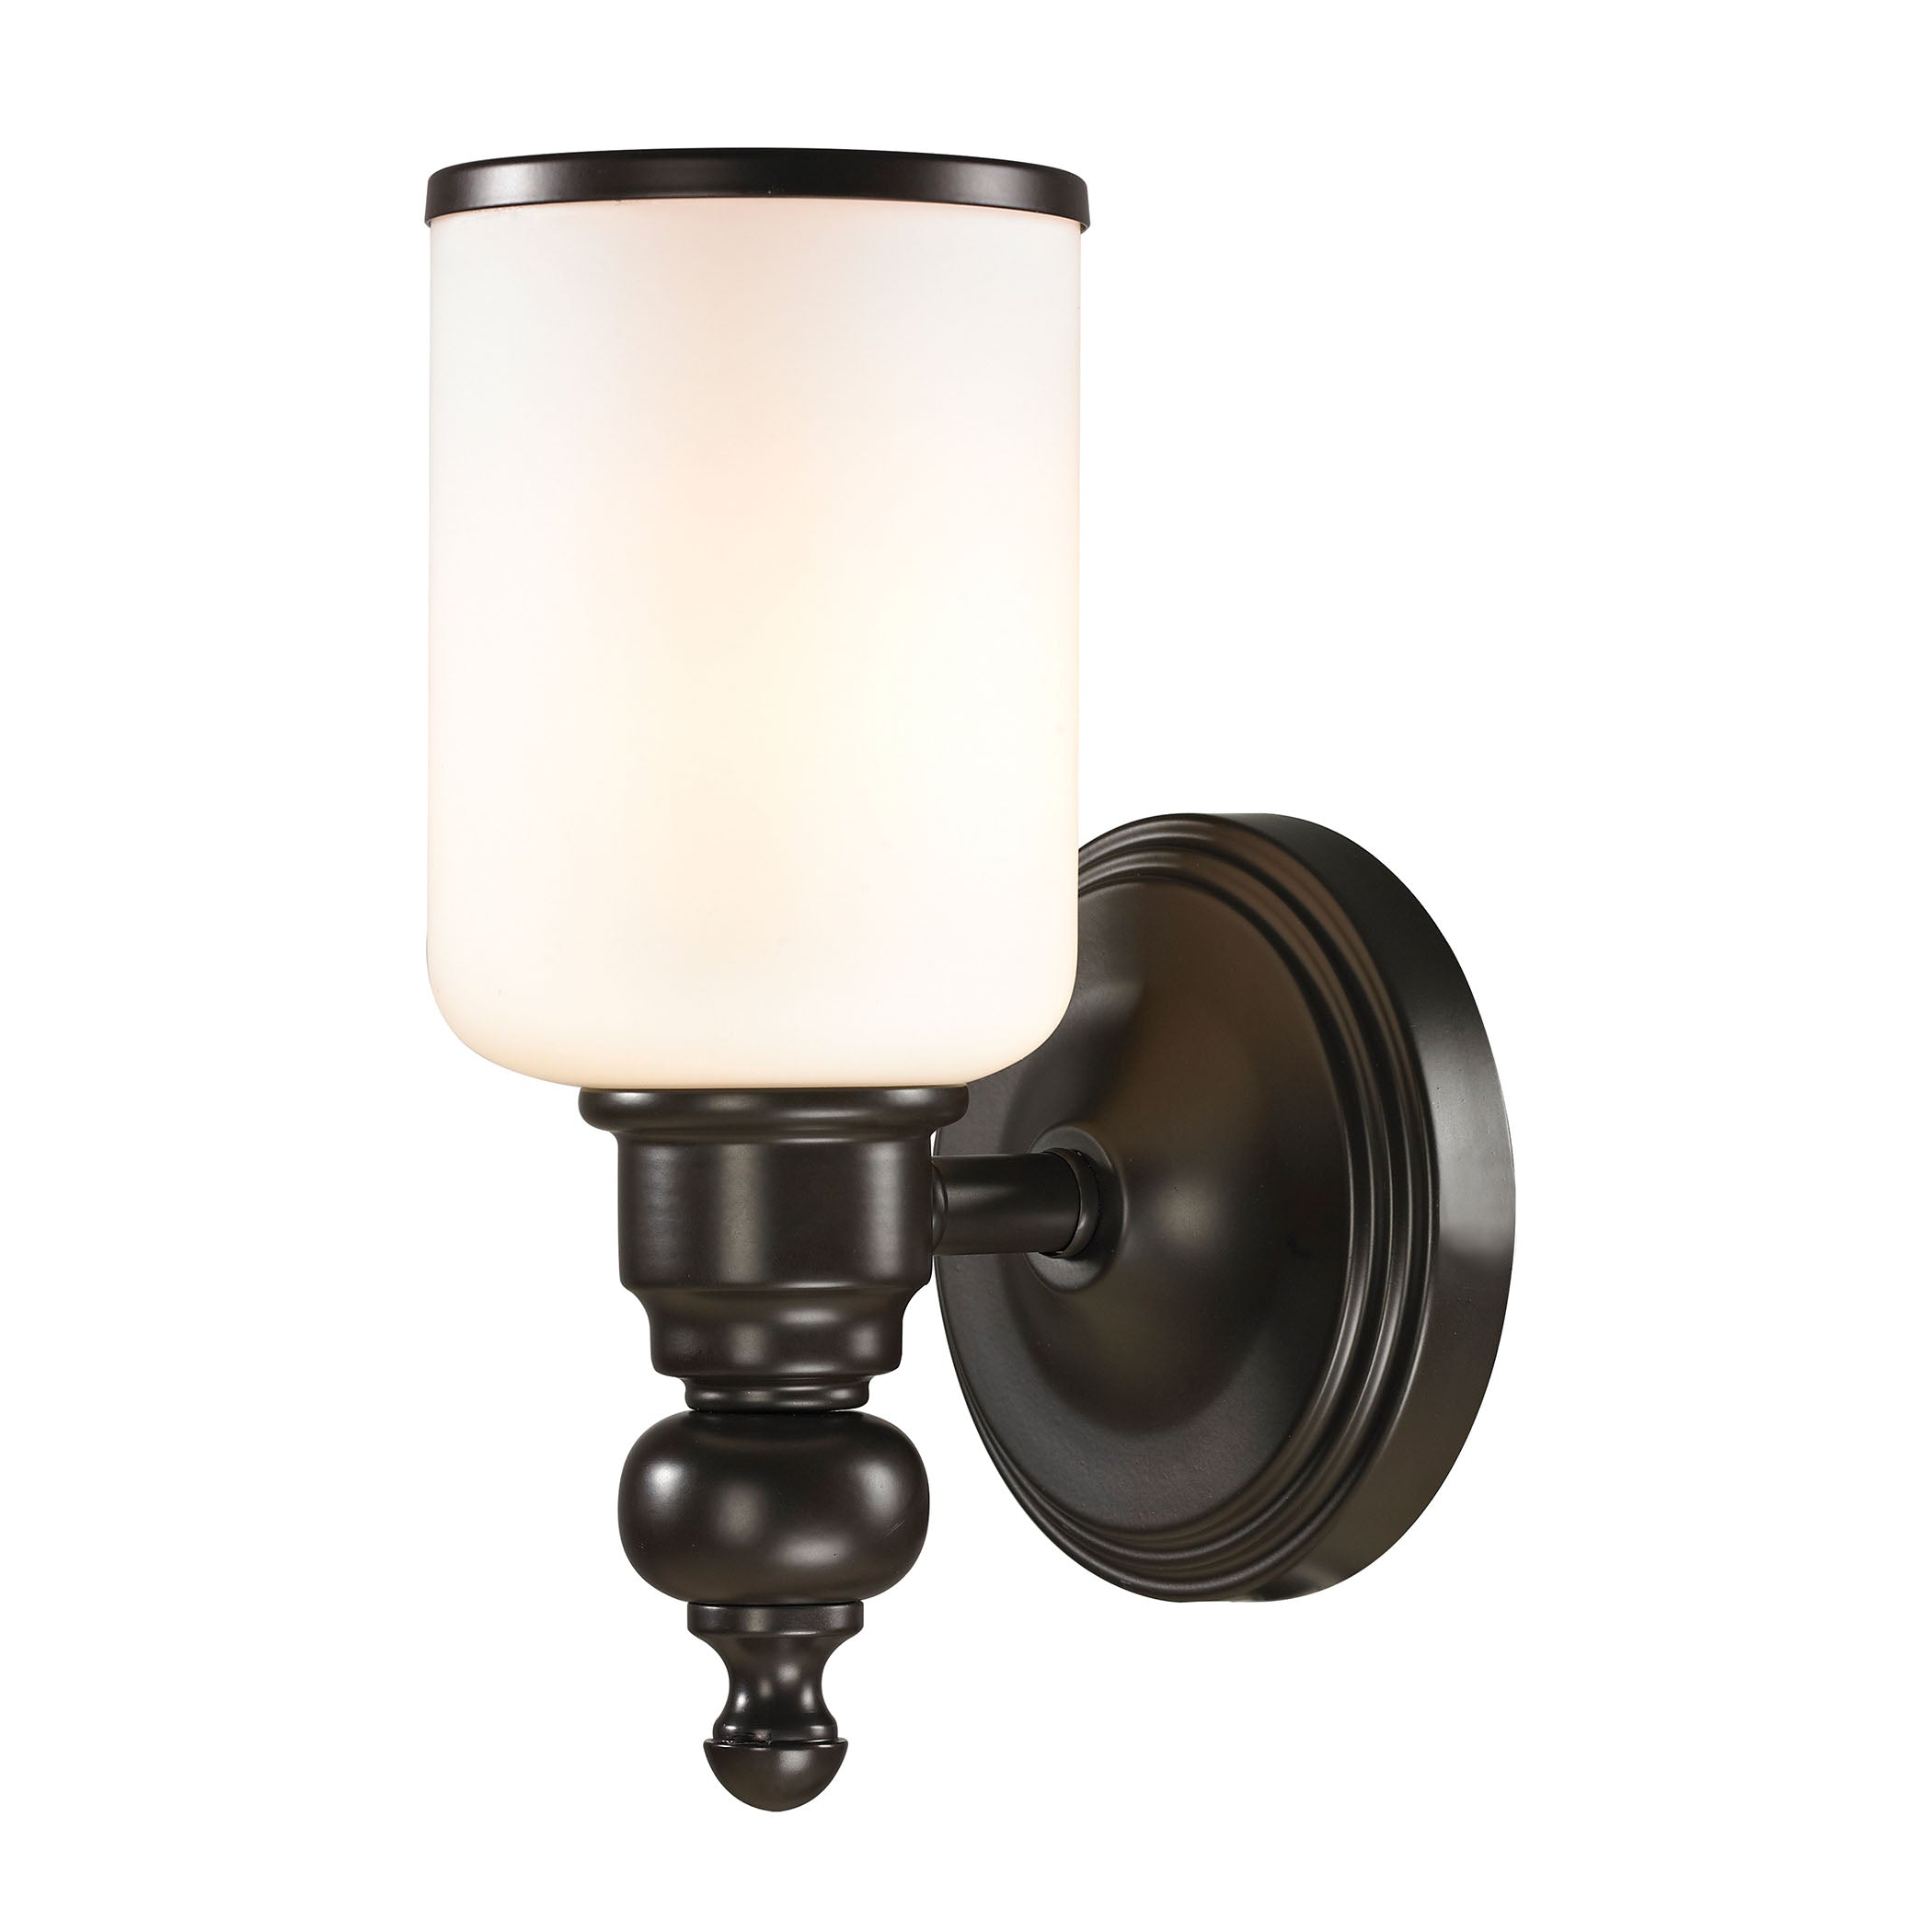 ELK Lighting 11590/1 Bristol Way 1-Light Vanity Lamp in Oil Rubbed Bronze with Opal White Blown Glass